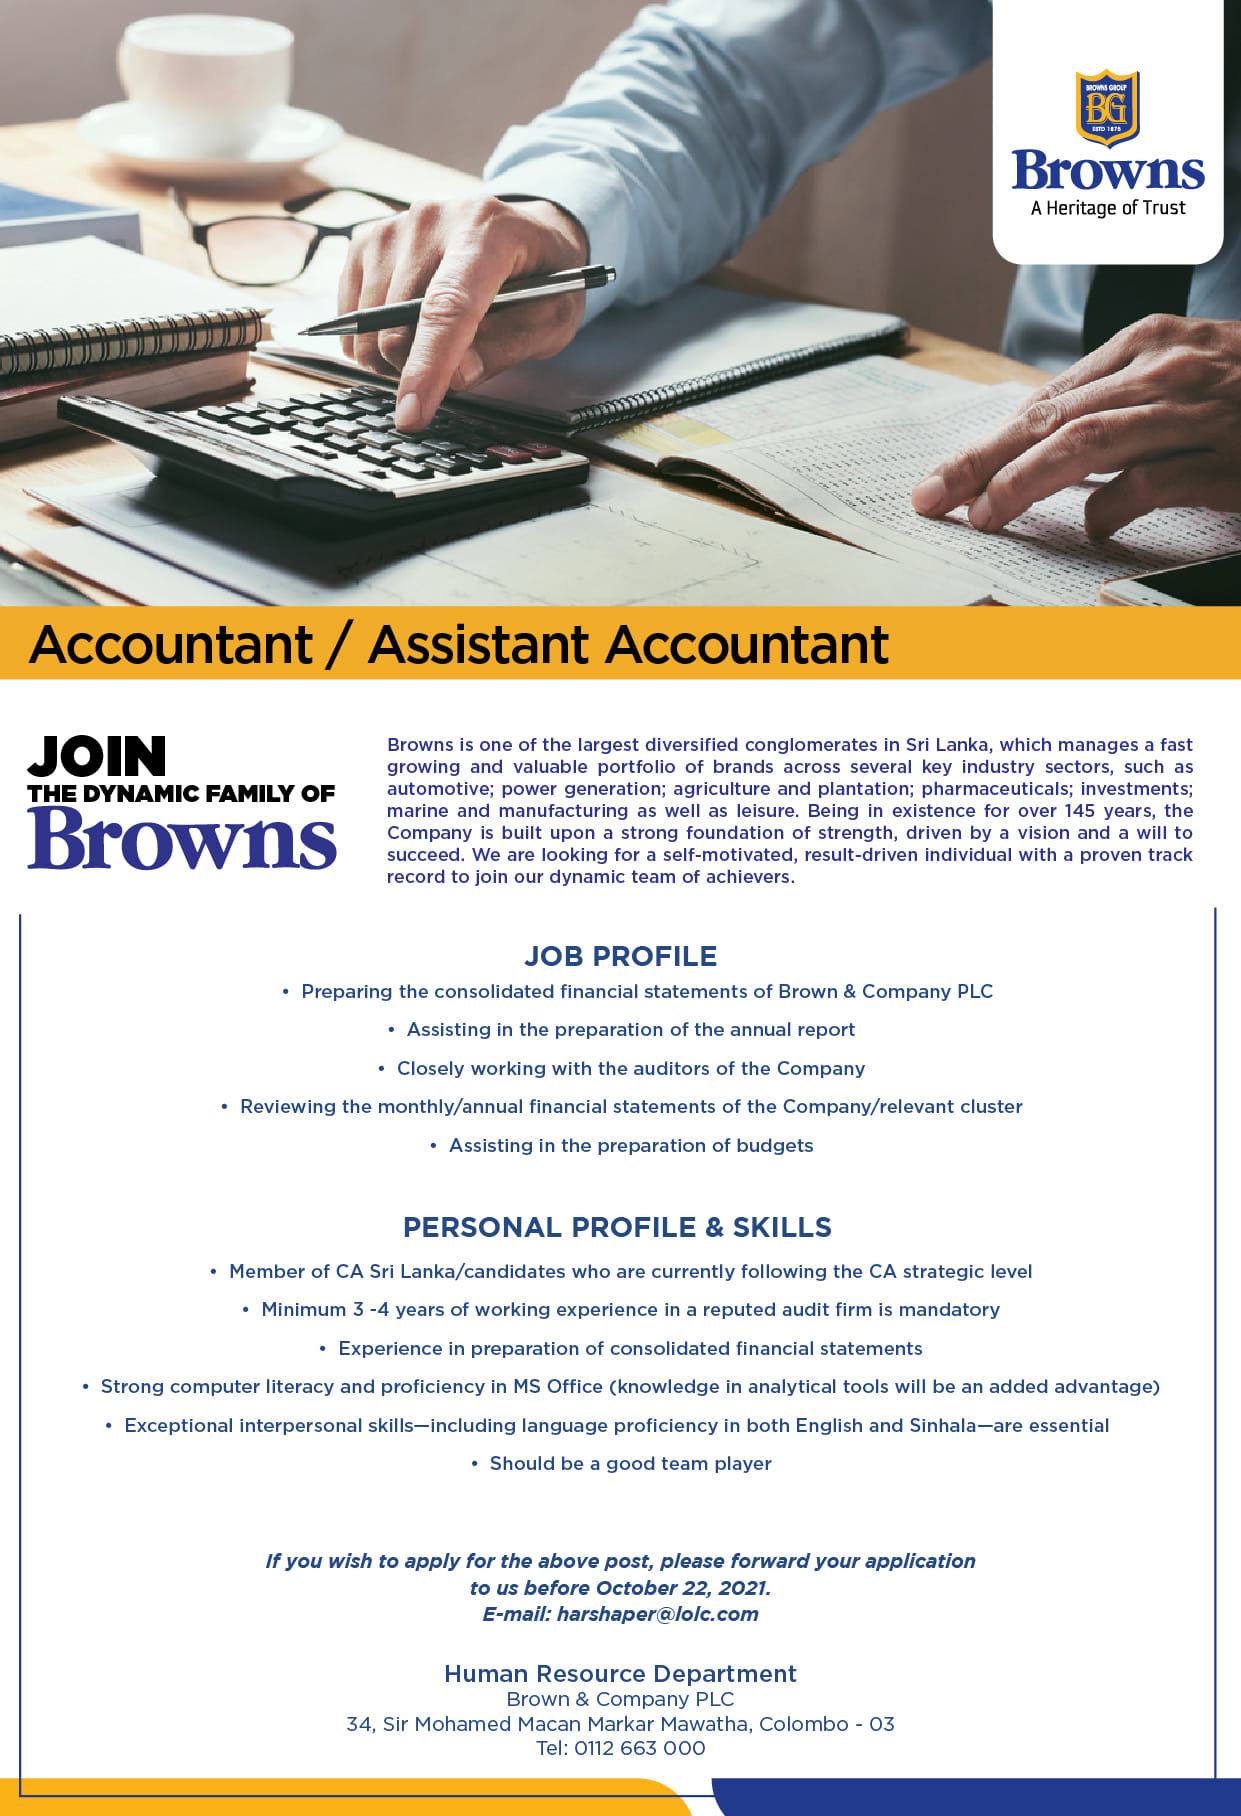 Accountant / Assistant Accountant Jobs Vacancies – Brown and Company Job Vacancy Details